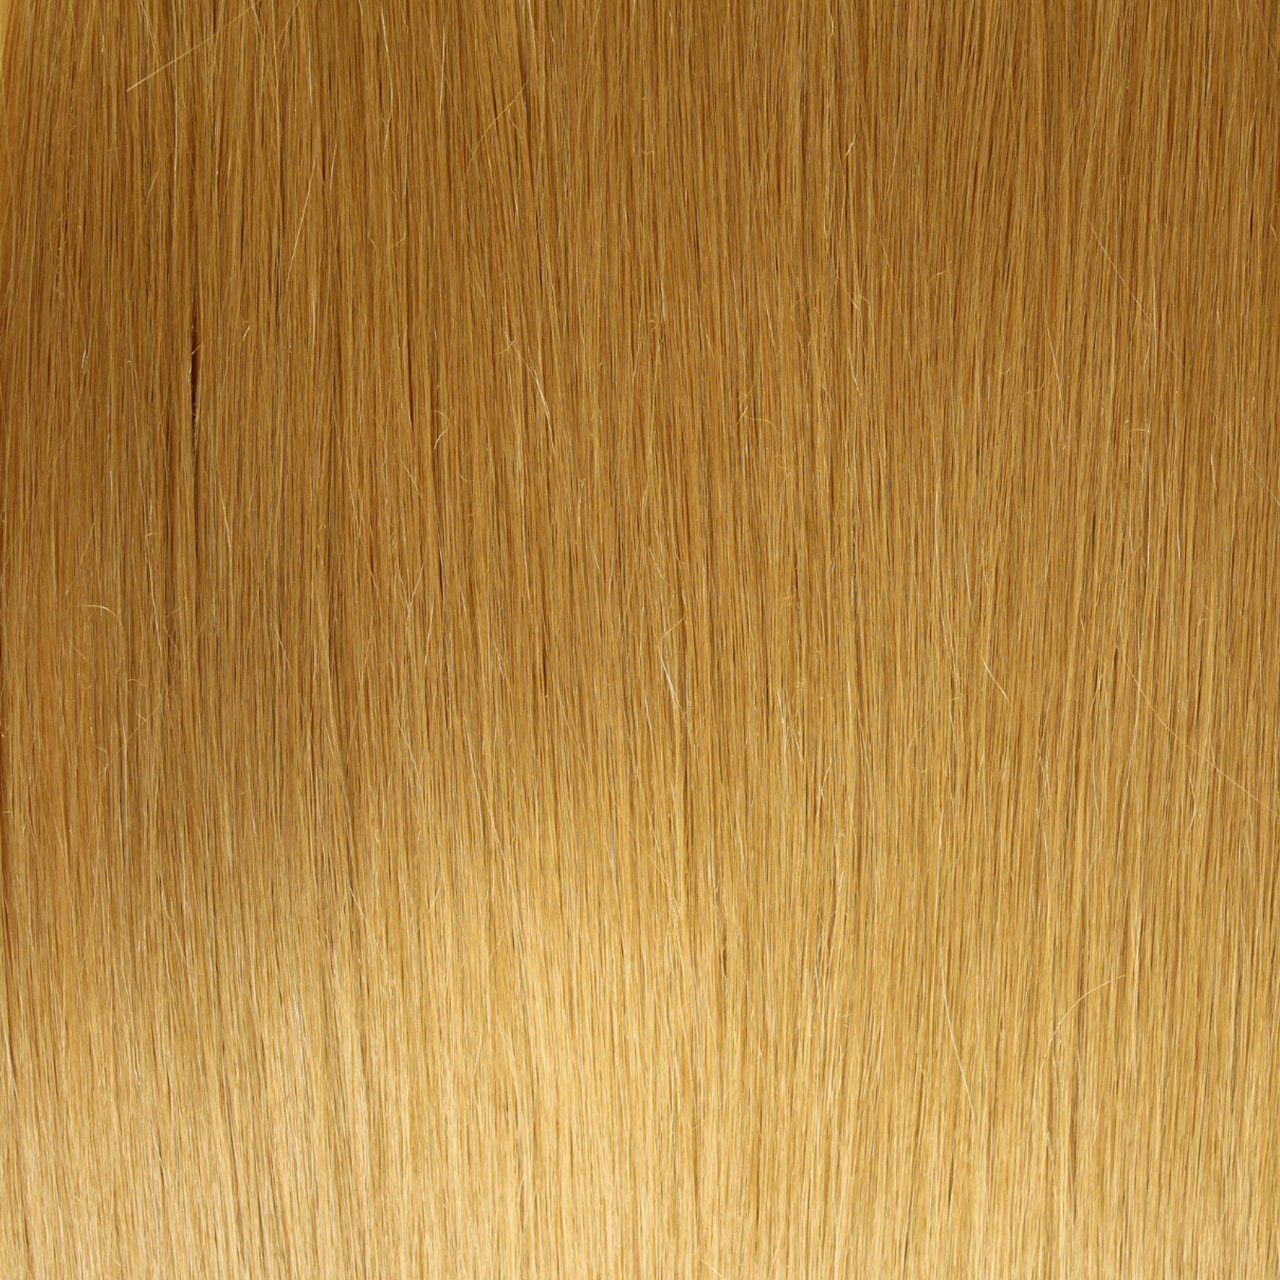 S-12 / gewellt hair2heart - Kunsthaar-Extension Ponytail Haarteil